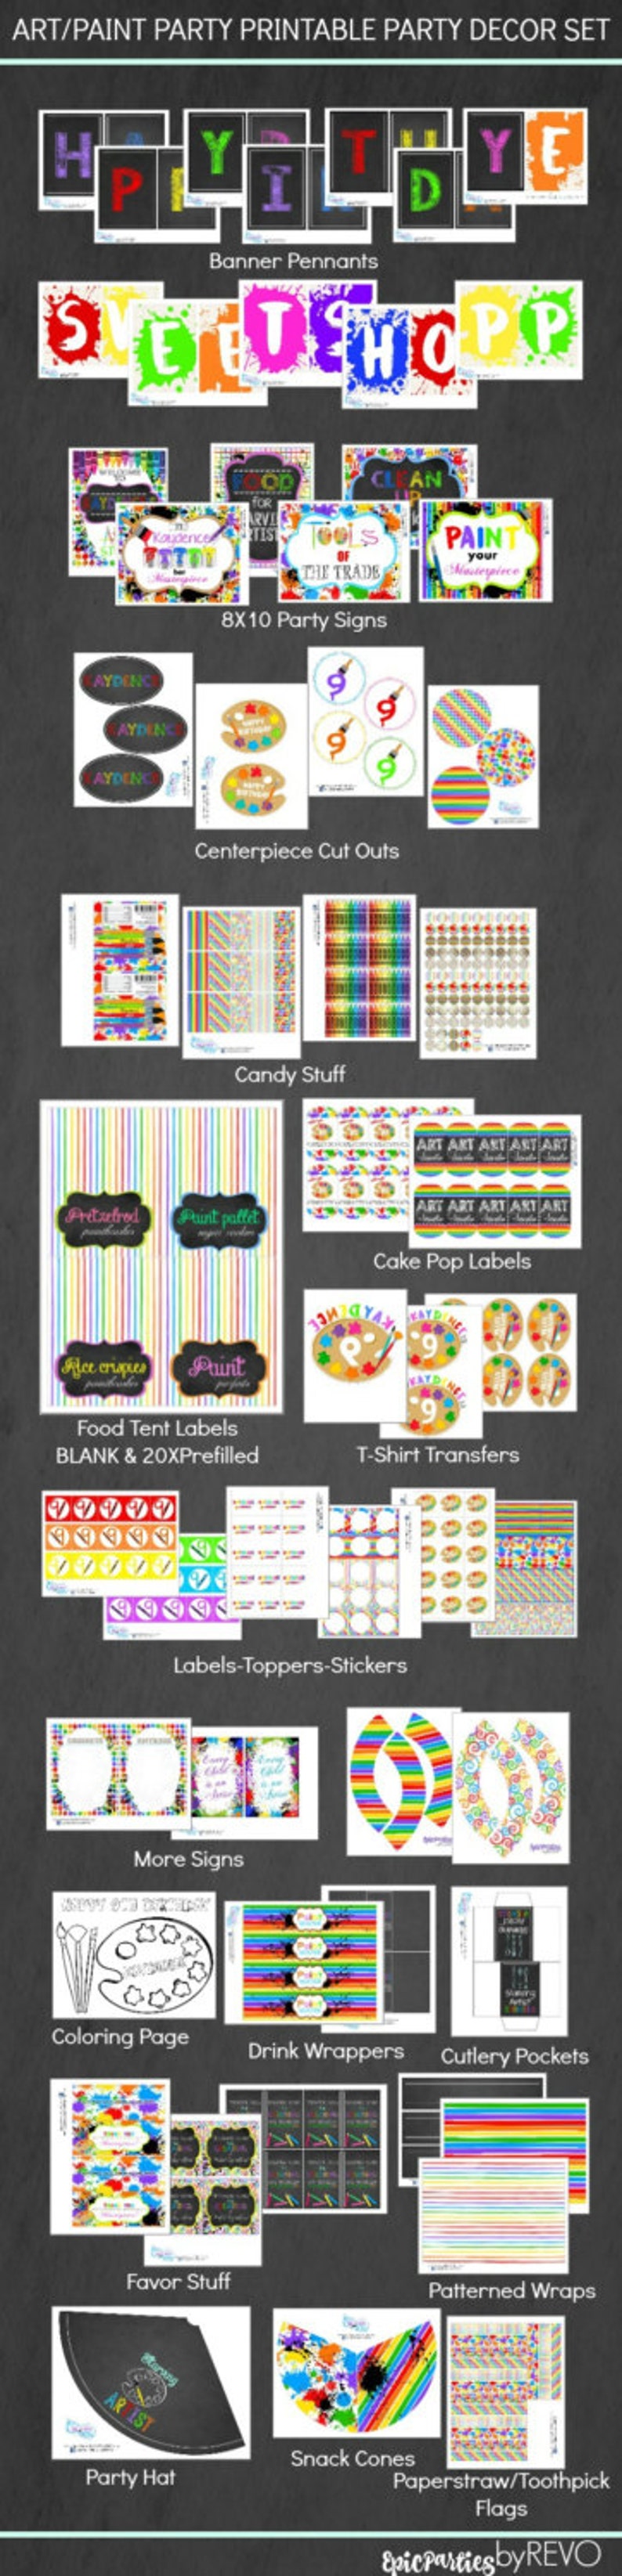 free-crayon-printable-epic-parties-by-revo-printable-templates